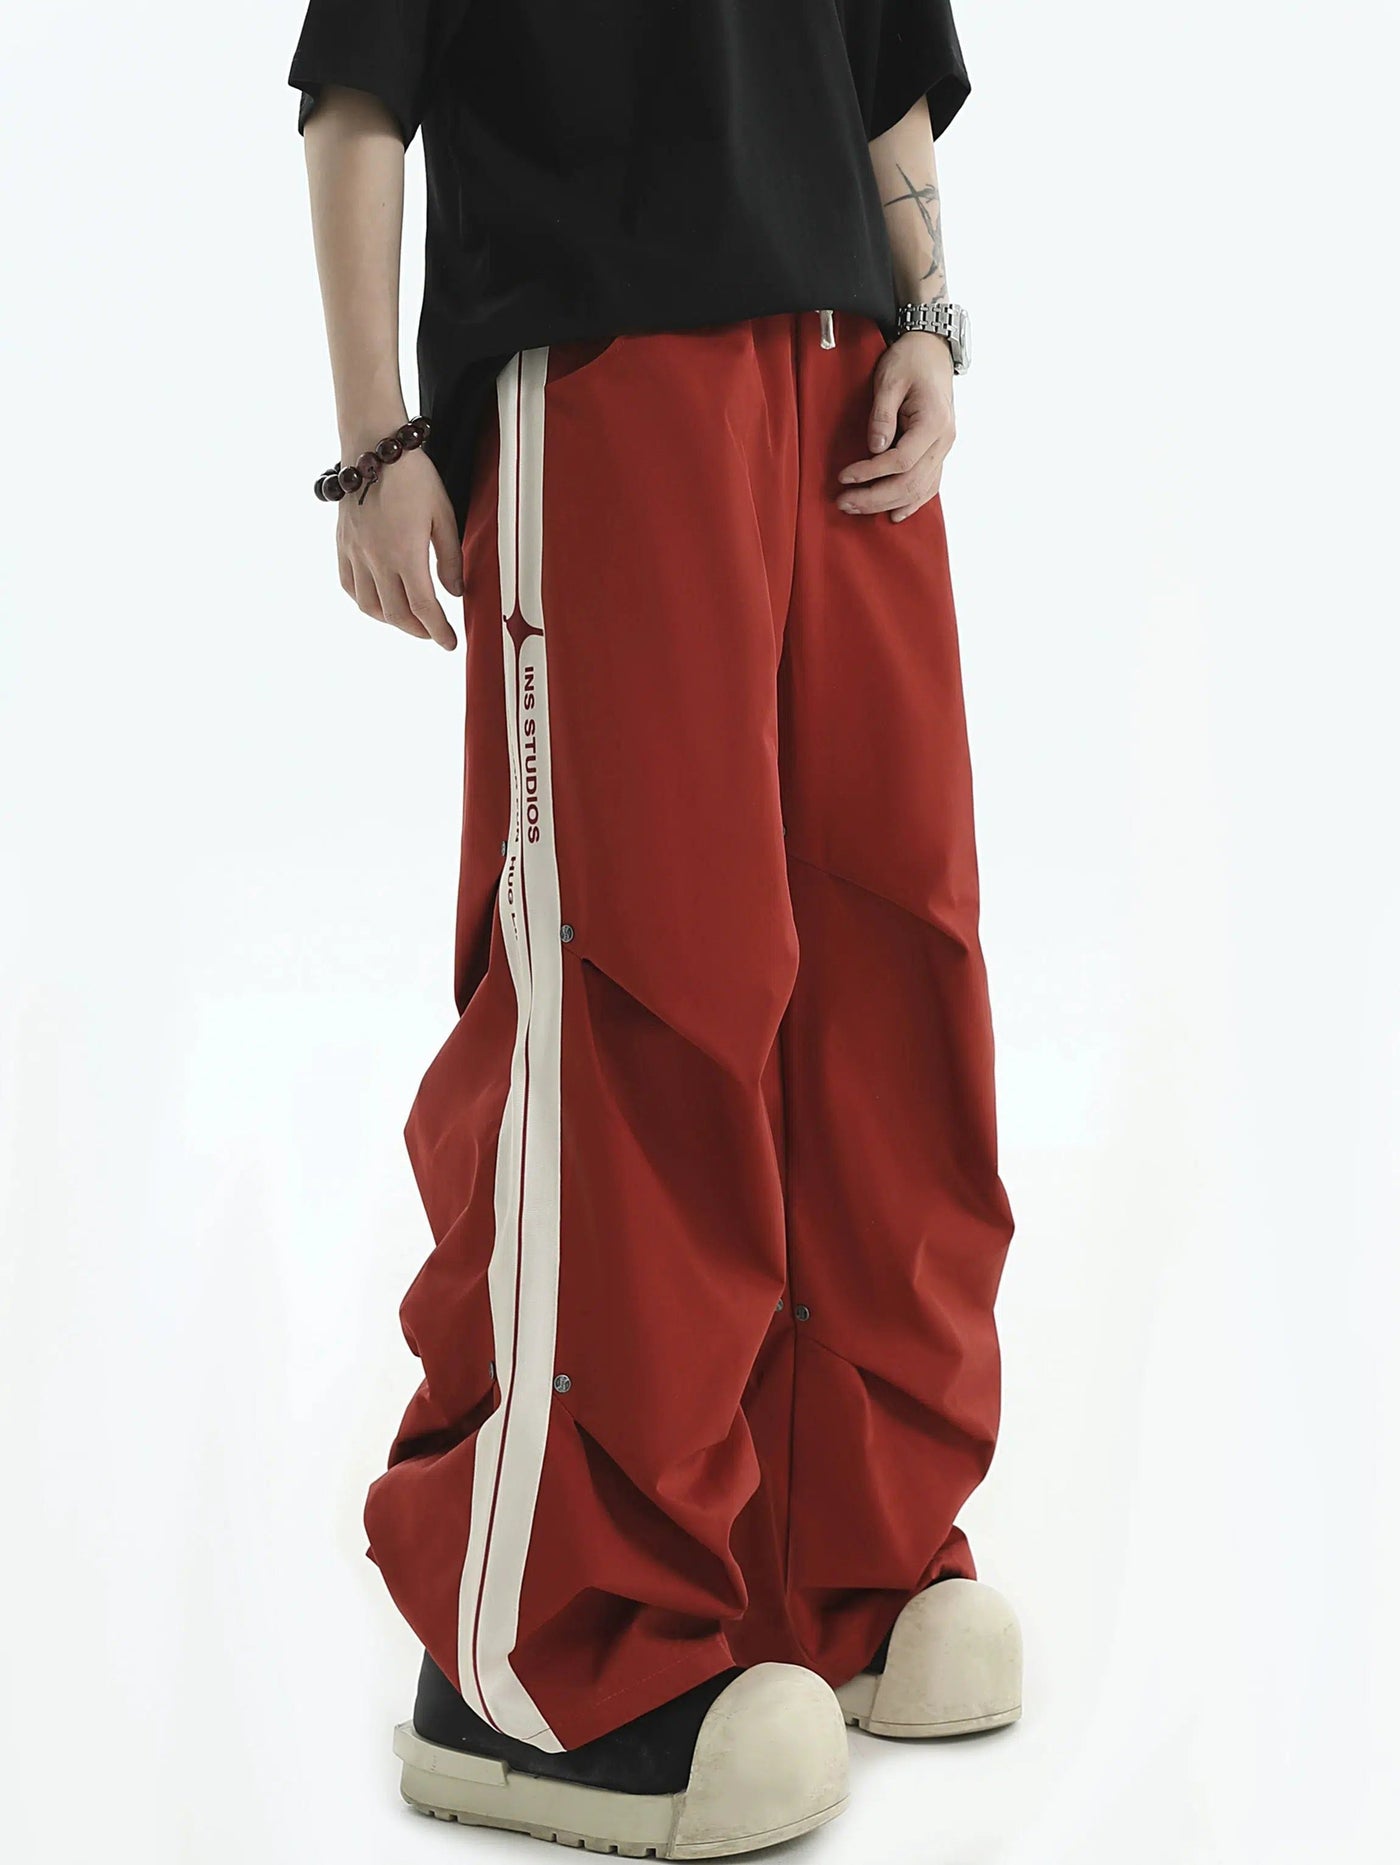 Wide Fit Contrast Pants Korean Street Fashion Pants By INS Korea Shop Online at OH Vault